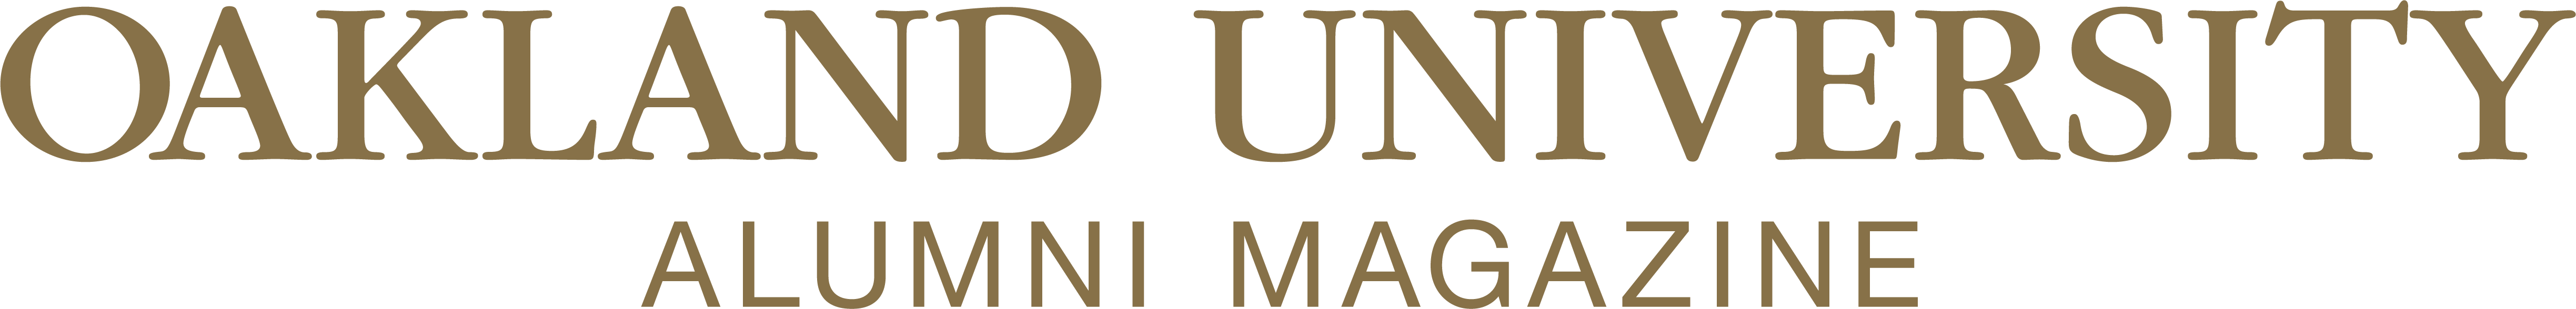 OU magazine main header logo